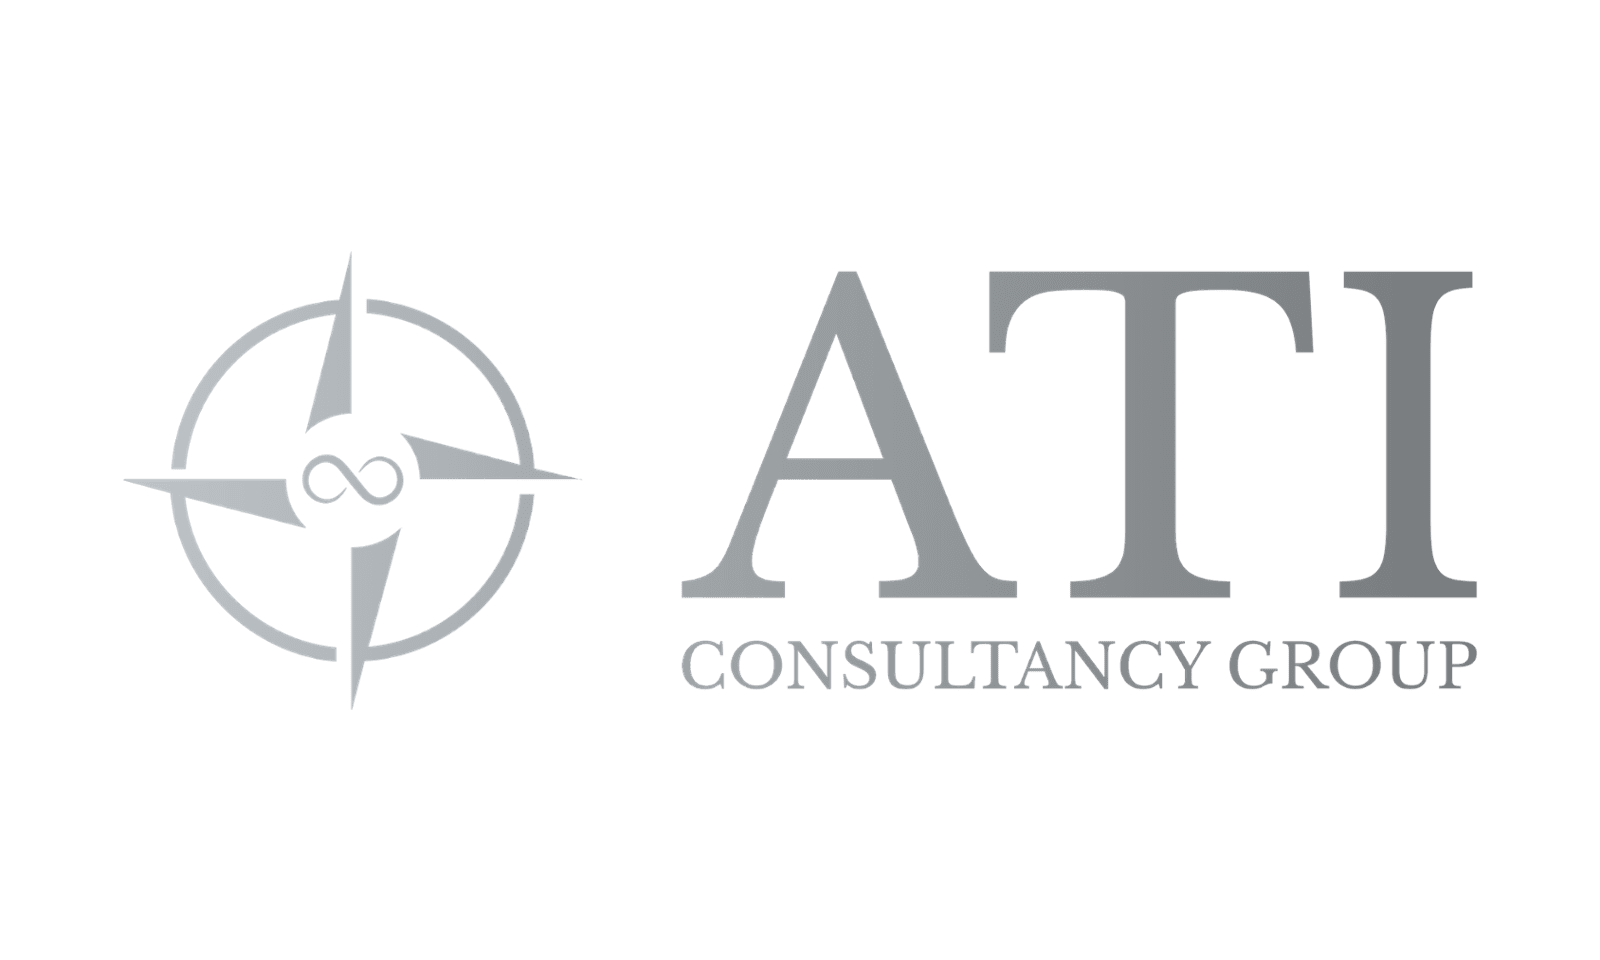 ATI Consultancy Group